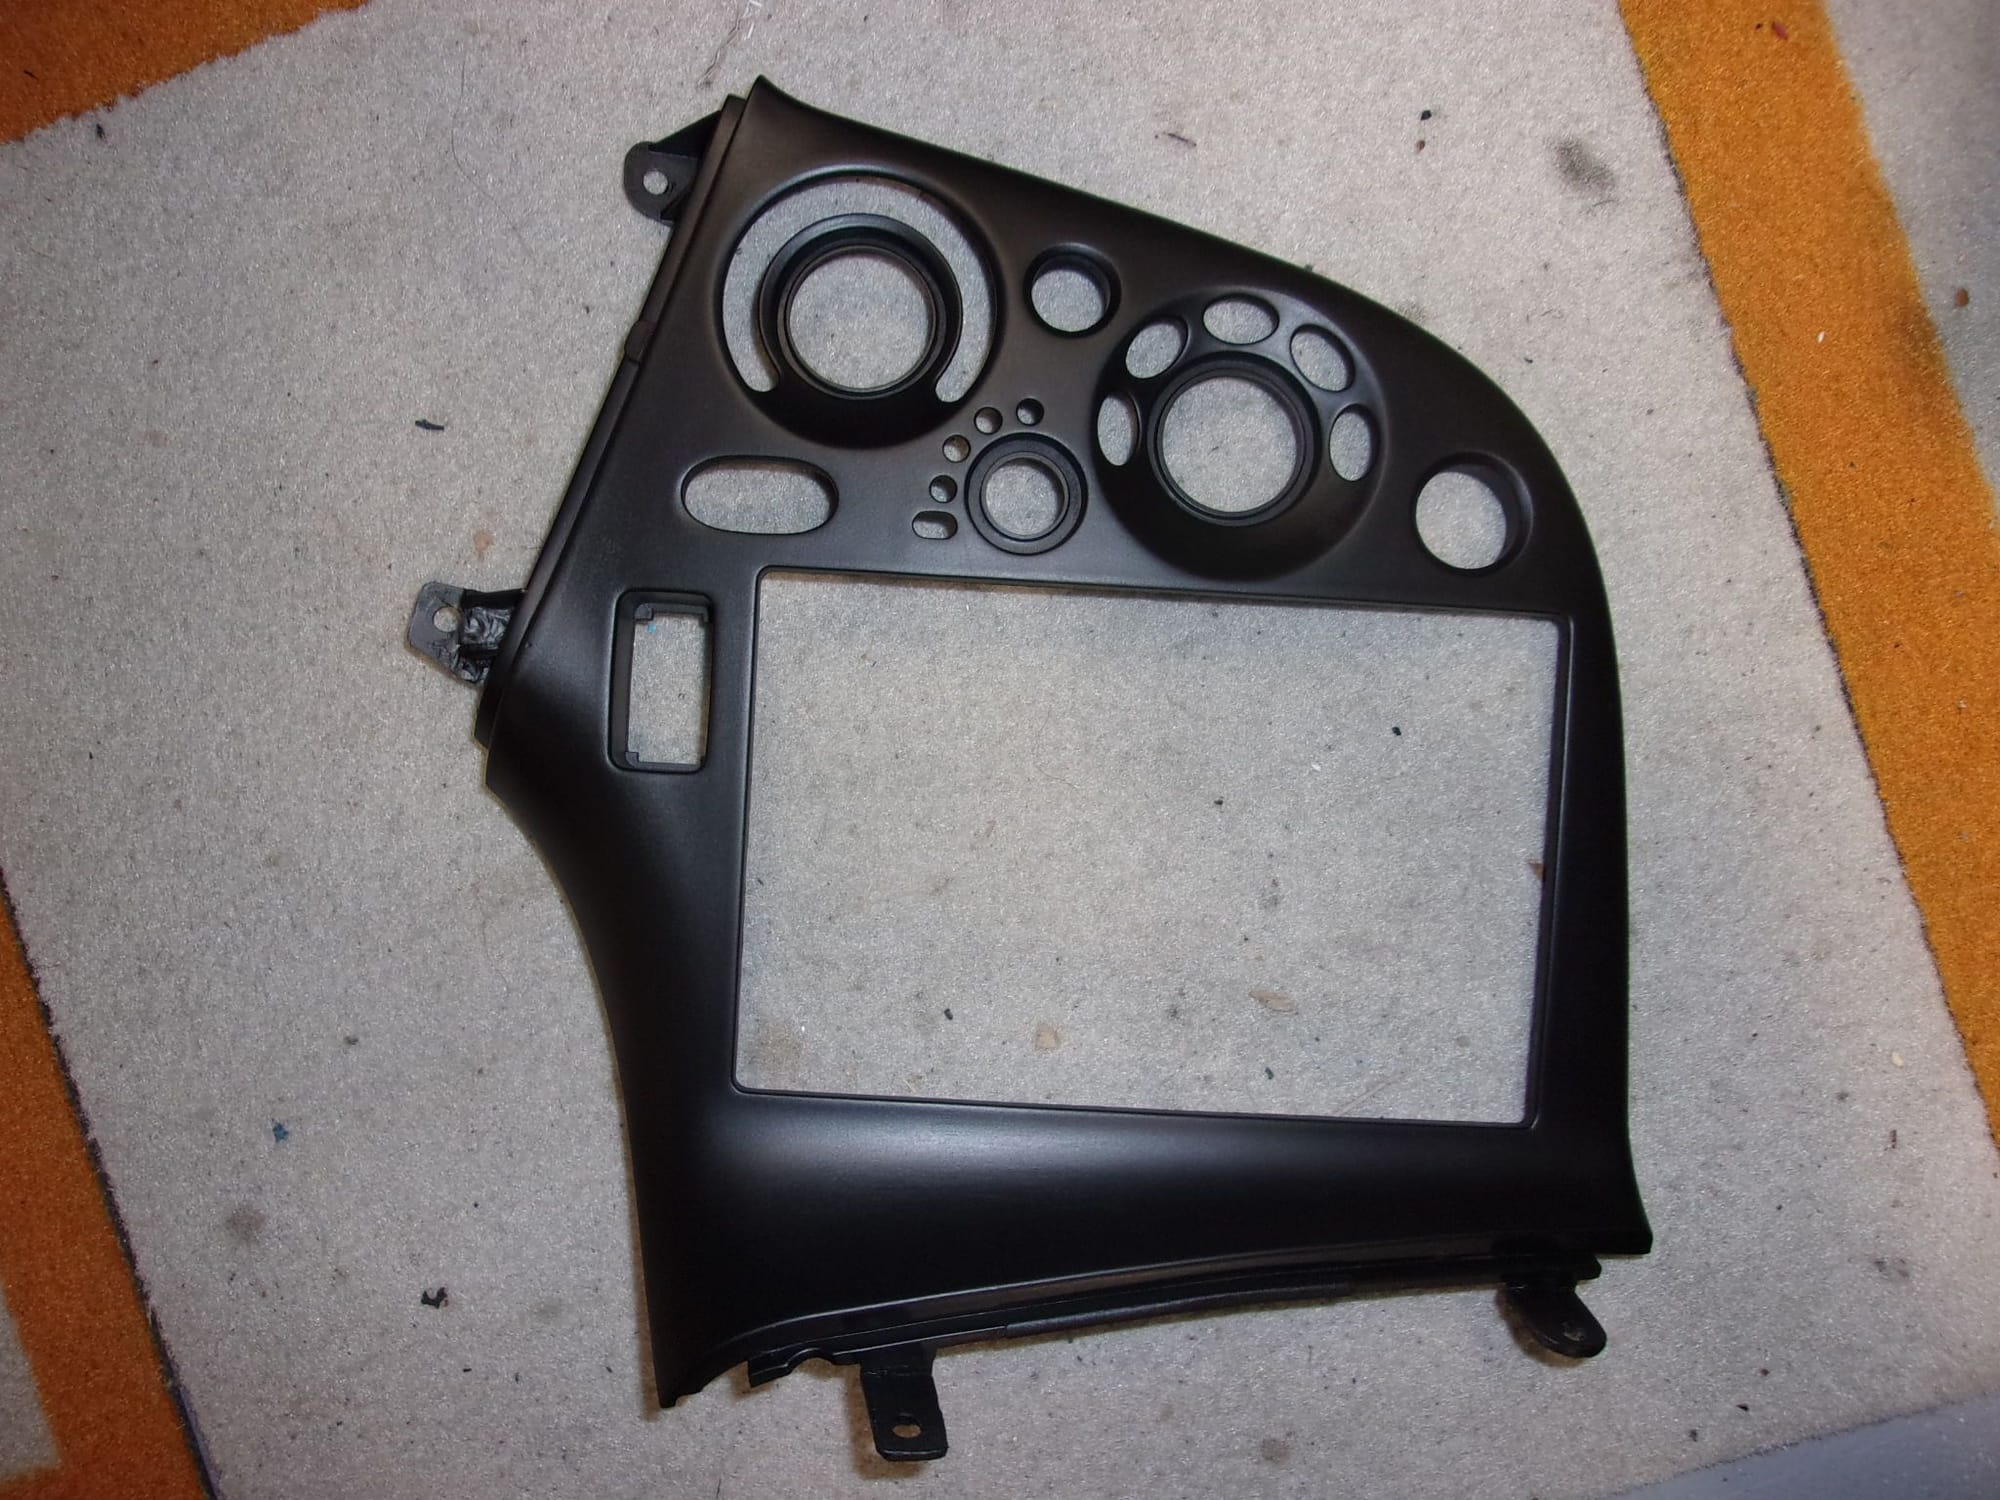 Brakes - Hard-to-Find Parts #6 - Used - 1993 Mazda RX-7 - Murfreesboro, TN 37130, United States